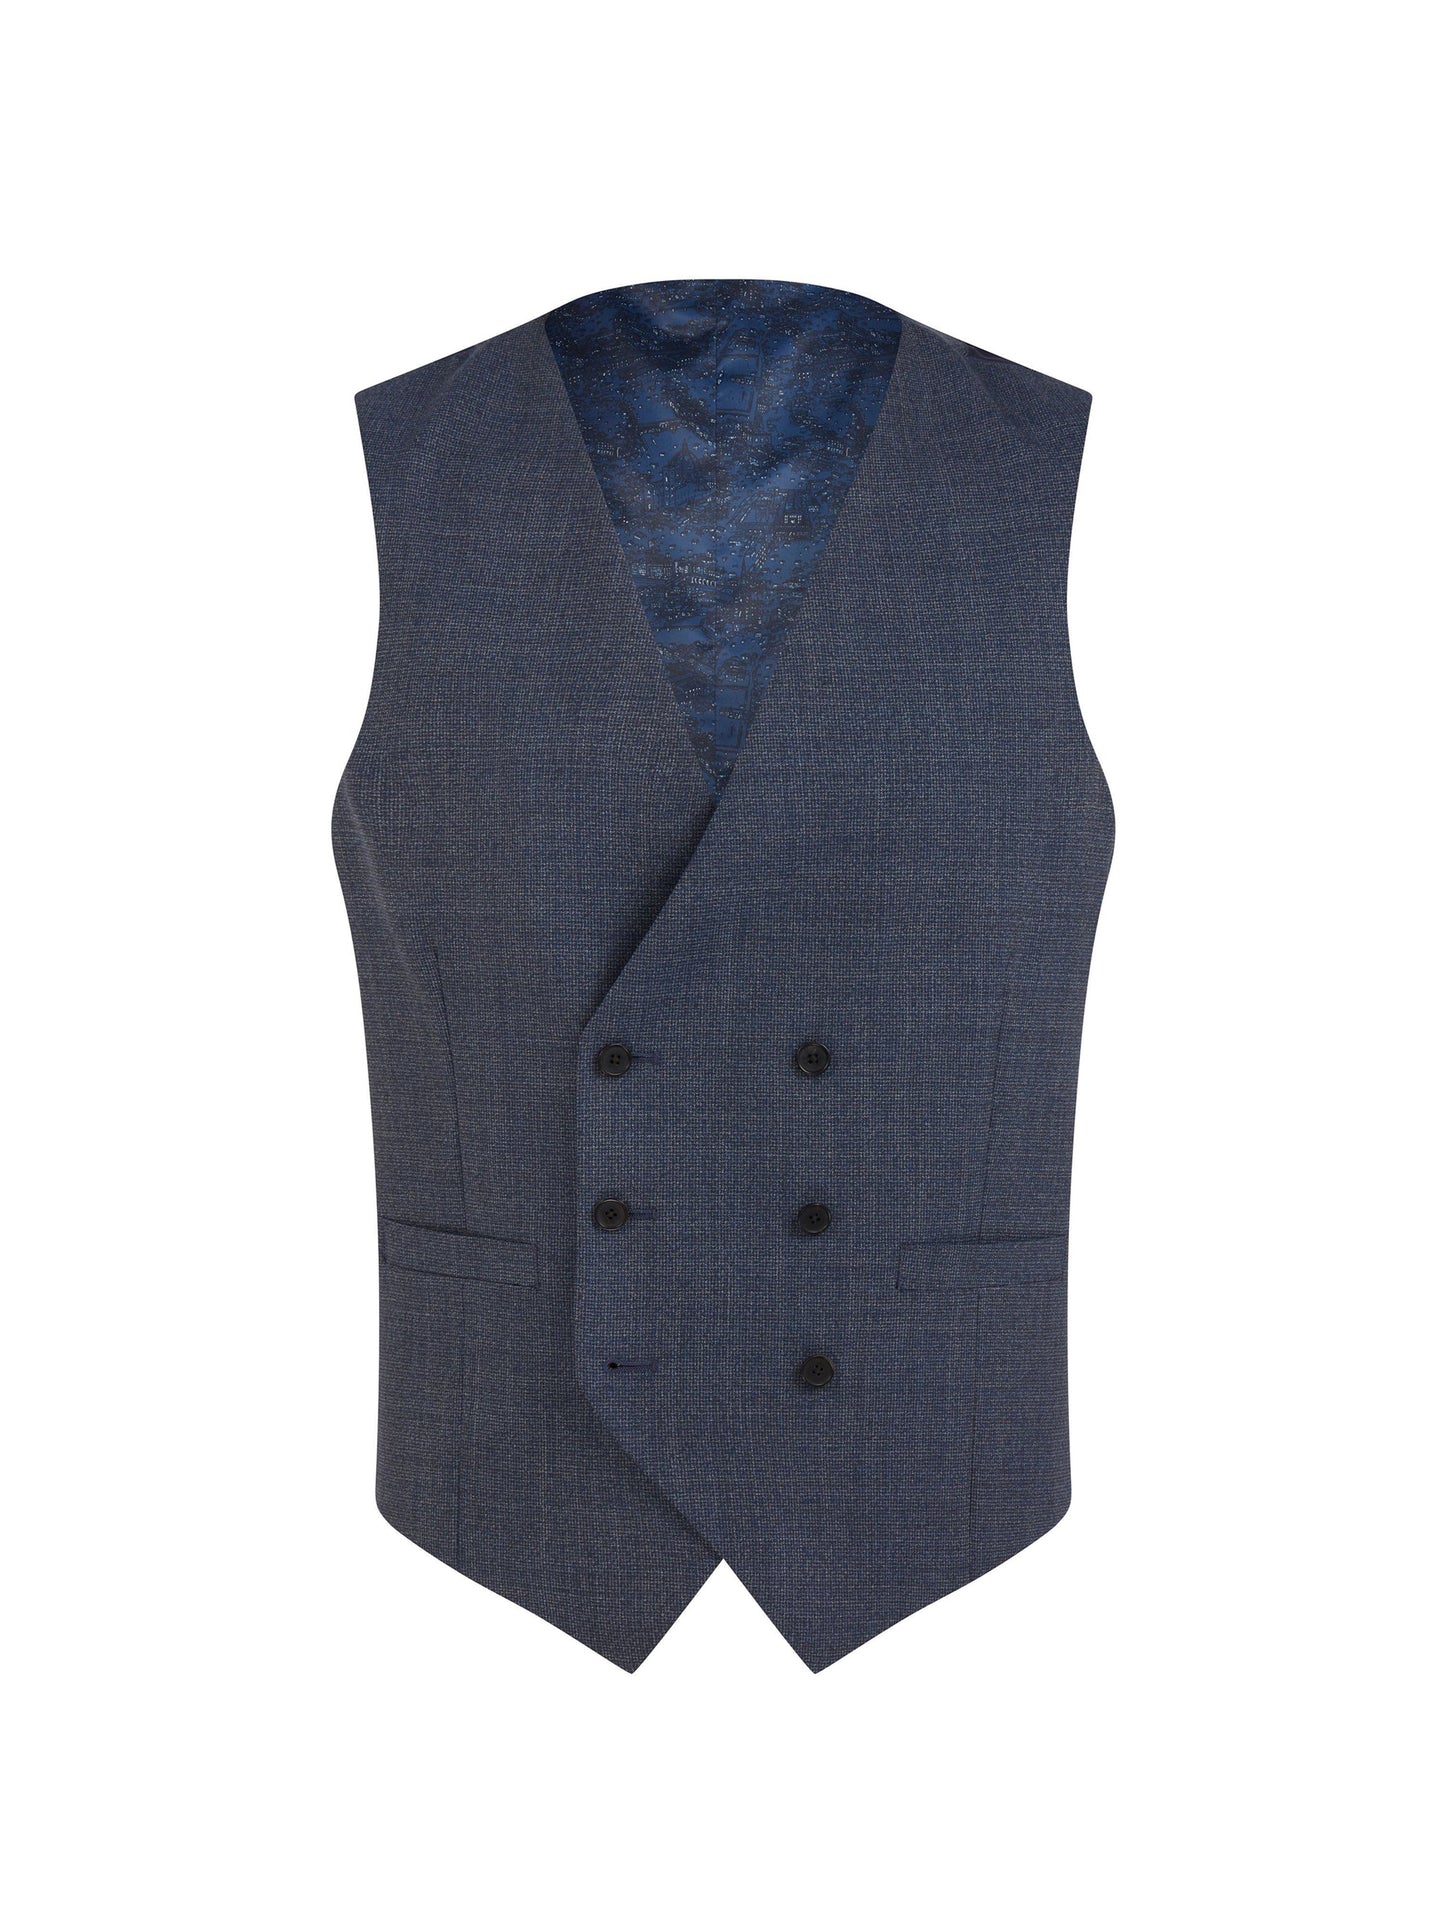 Caselli Zegna Slim Fit Navy Blue Textured Waistcoat